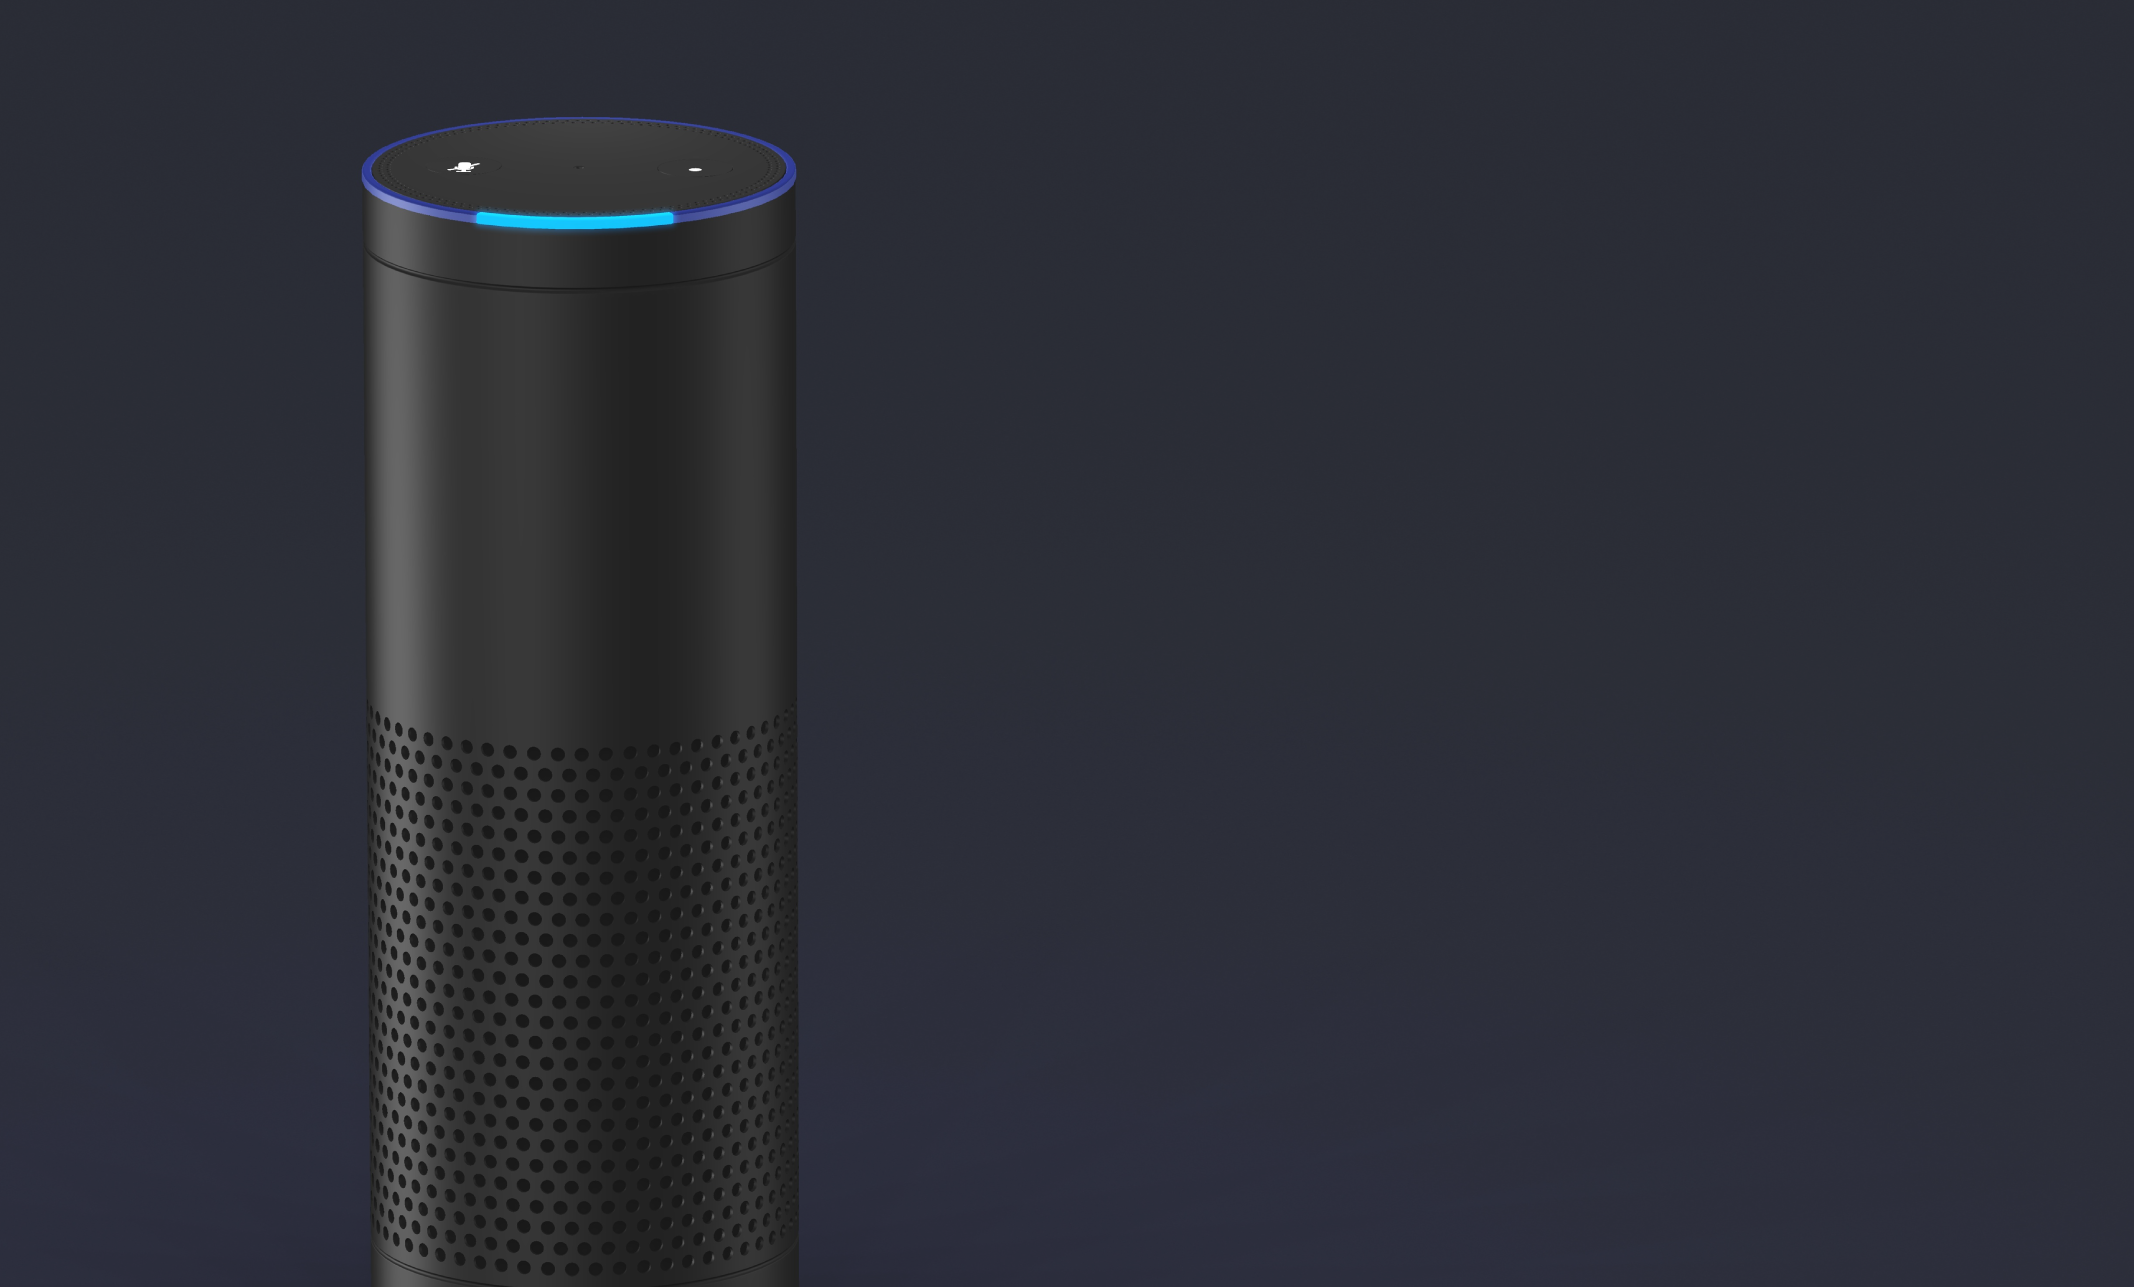 Closeup of Alexa Amazon Echo voice assistant